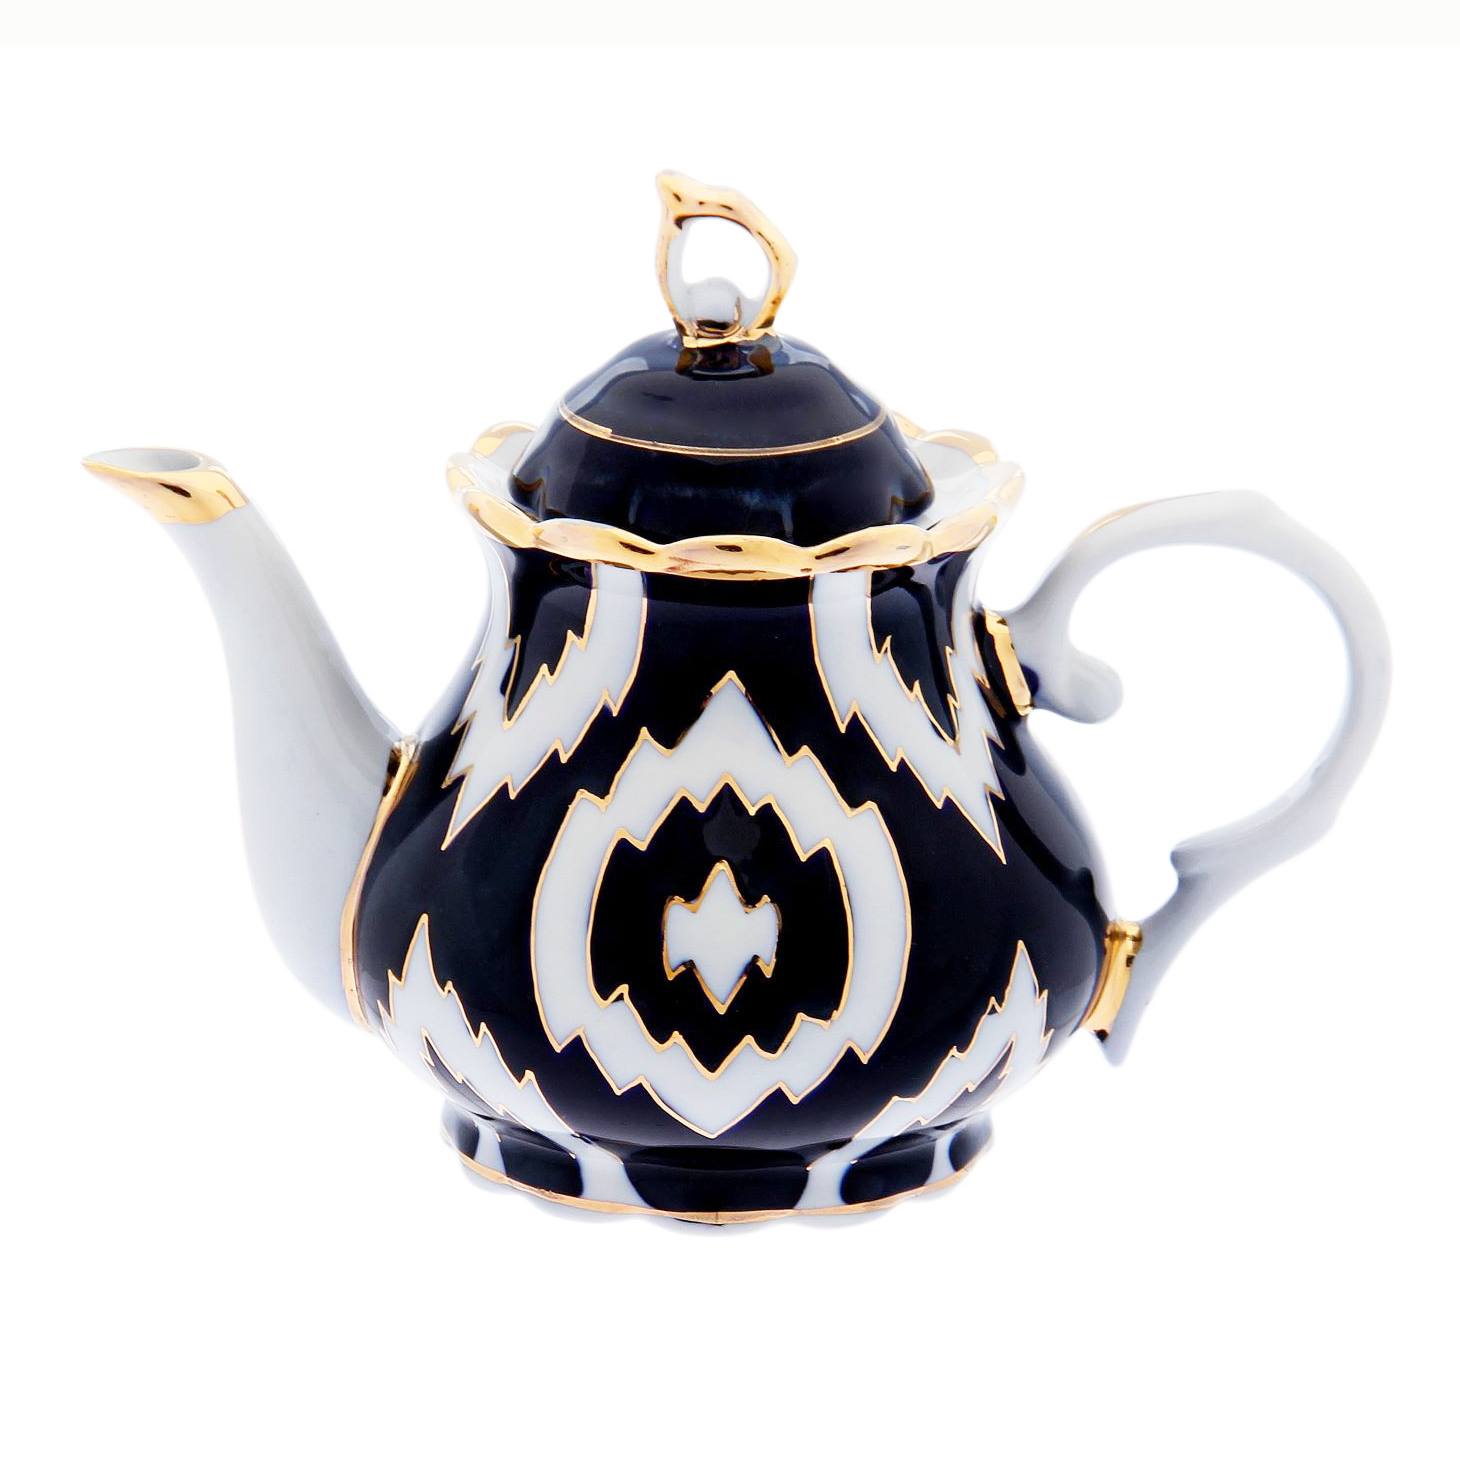 Узбекский чайник. Turon Porcelain чайник. Чайник заварочный 800мл stp9. Чайник заварочный Порселайн 250 мл. Чайник 1000мл атлас керамика.